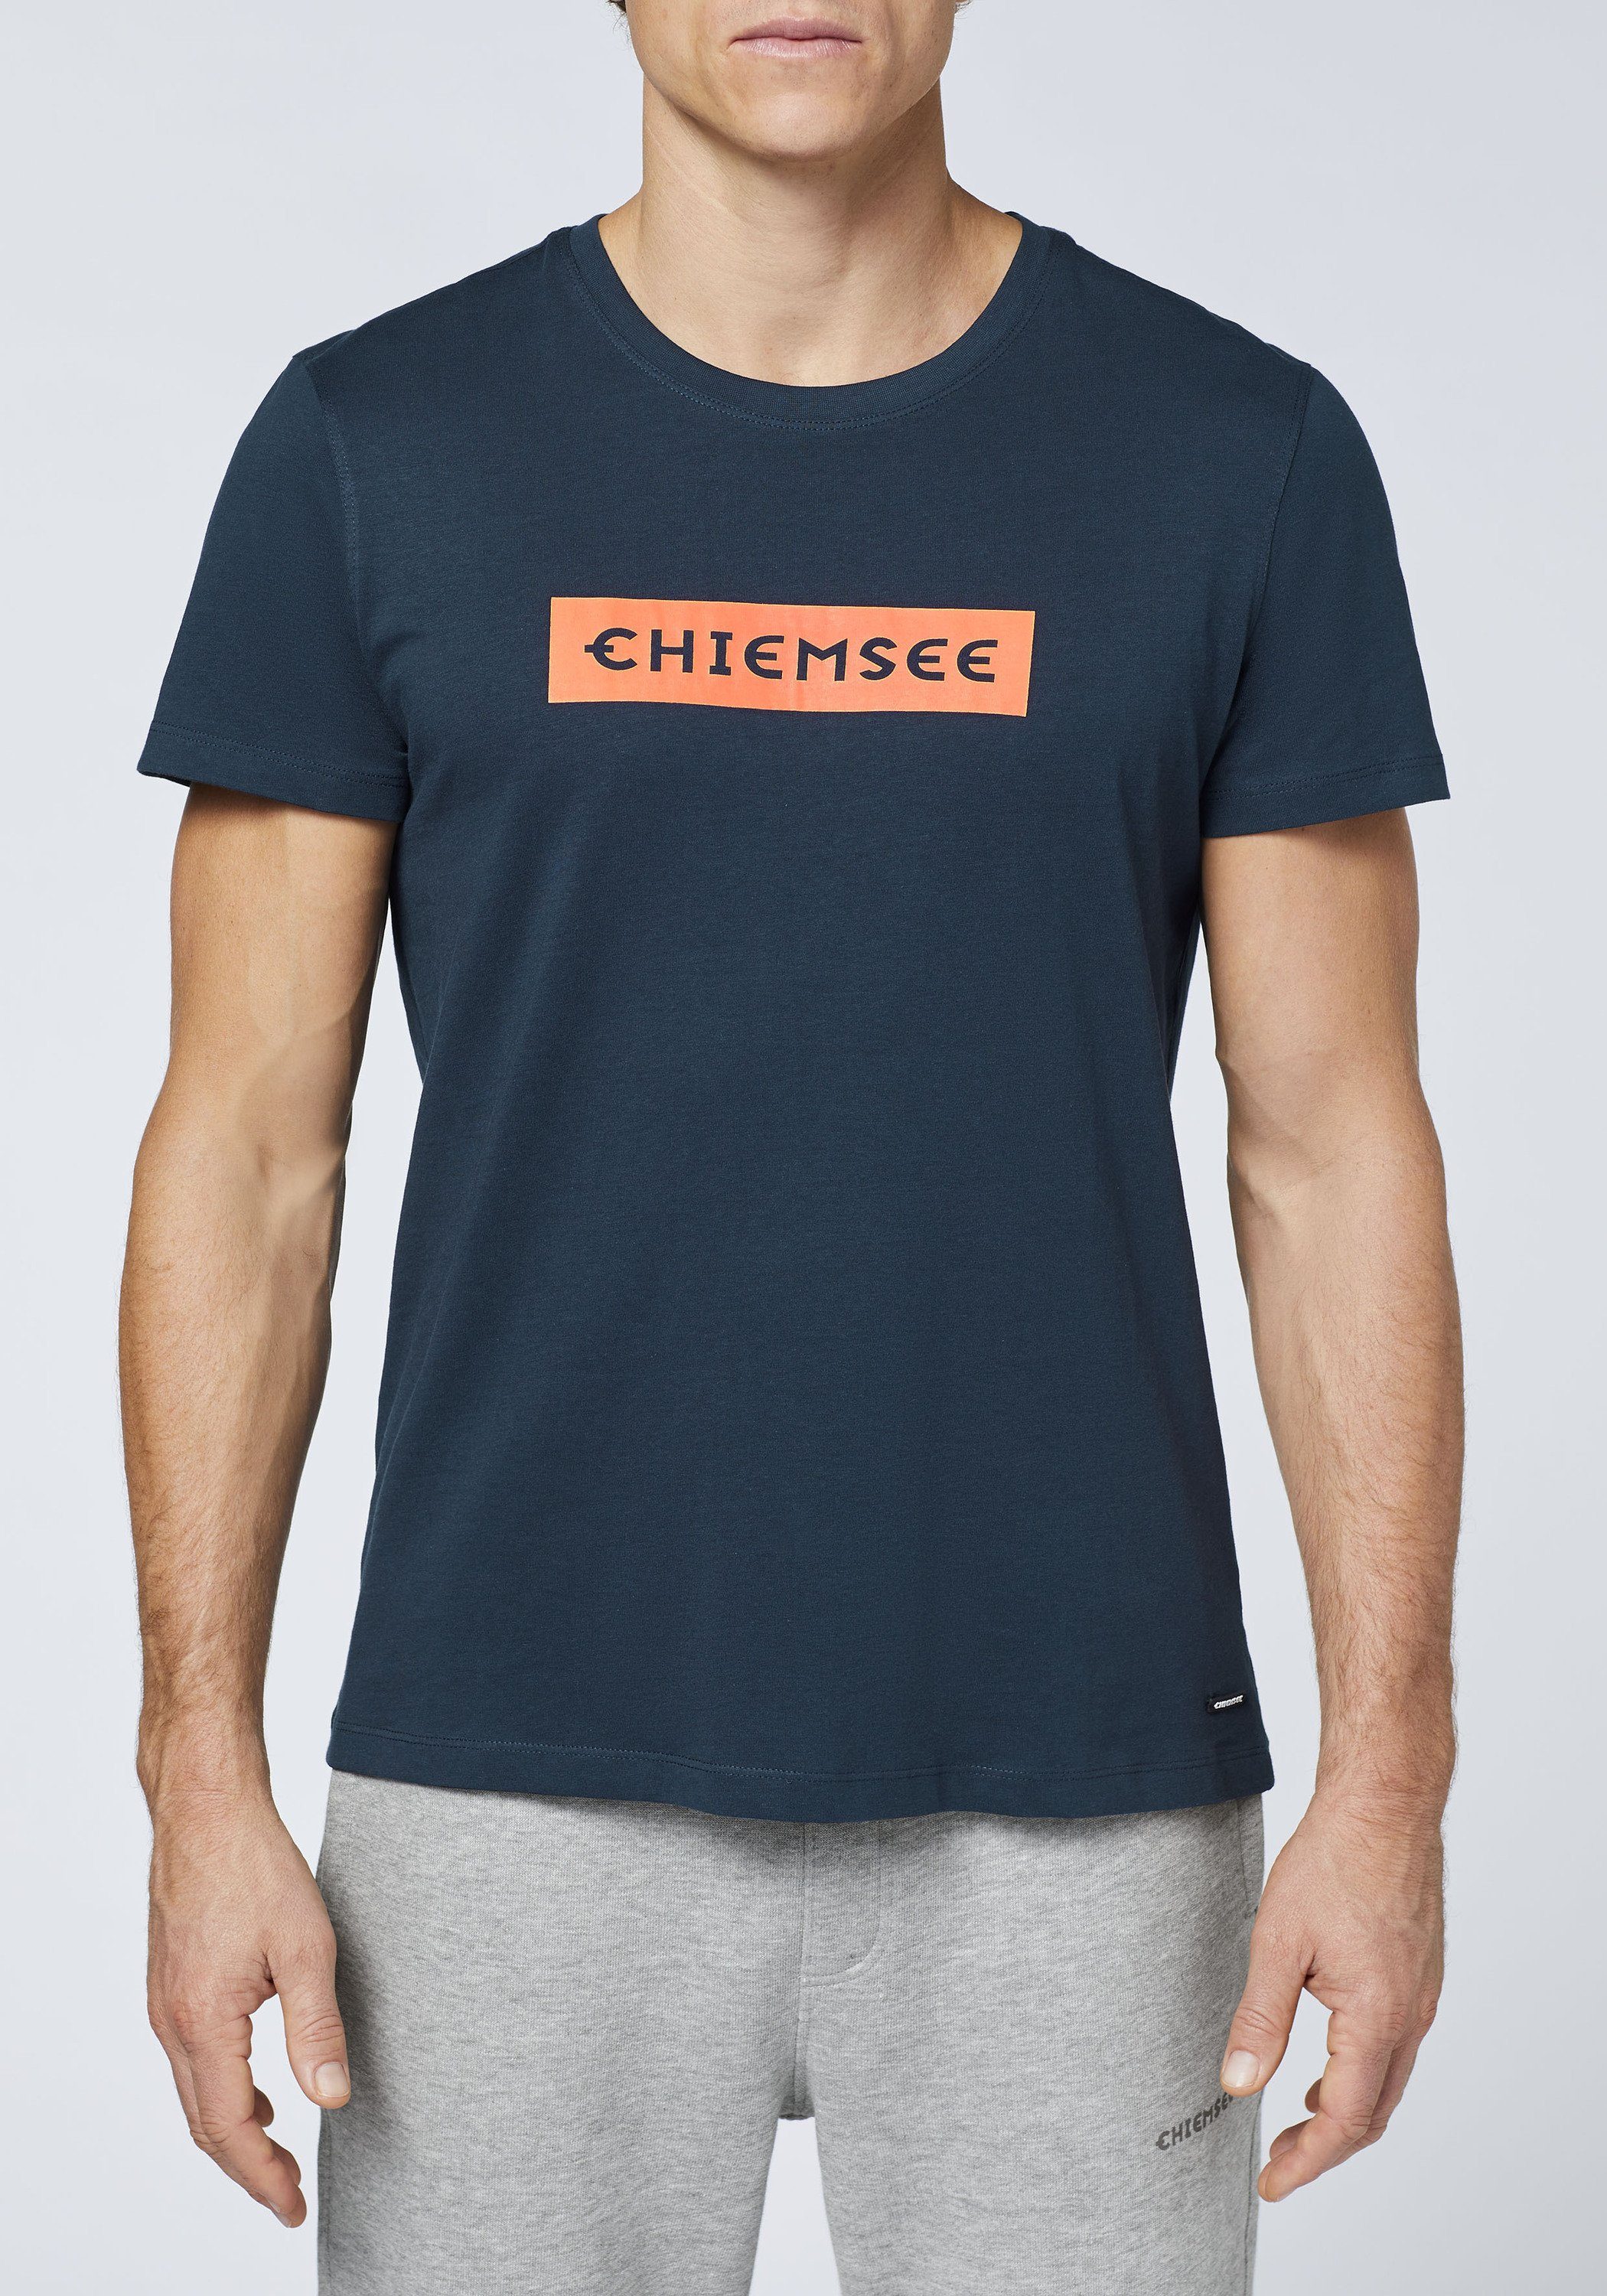 Print-Shirt Chiemsee T-Shirt 1 Eclipse Total Label-Schriftzug mit 19-4010